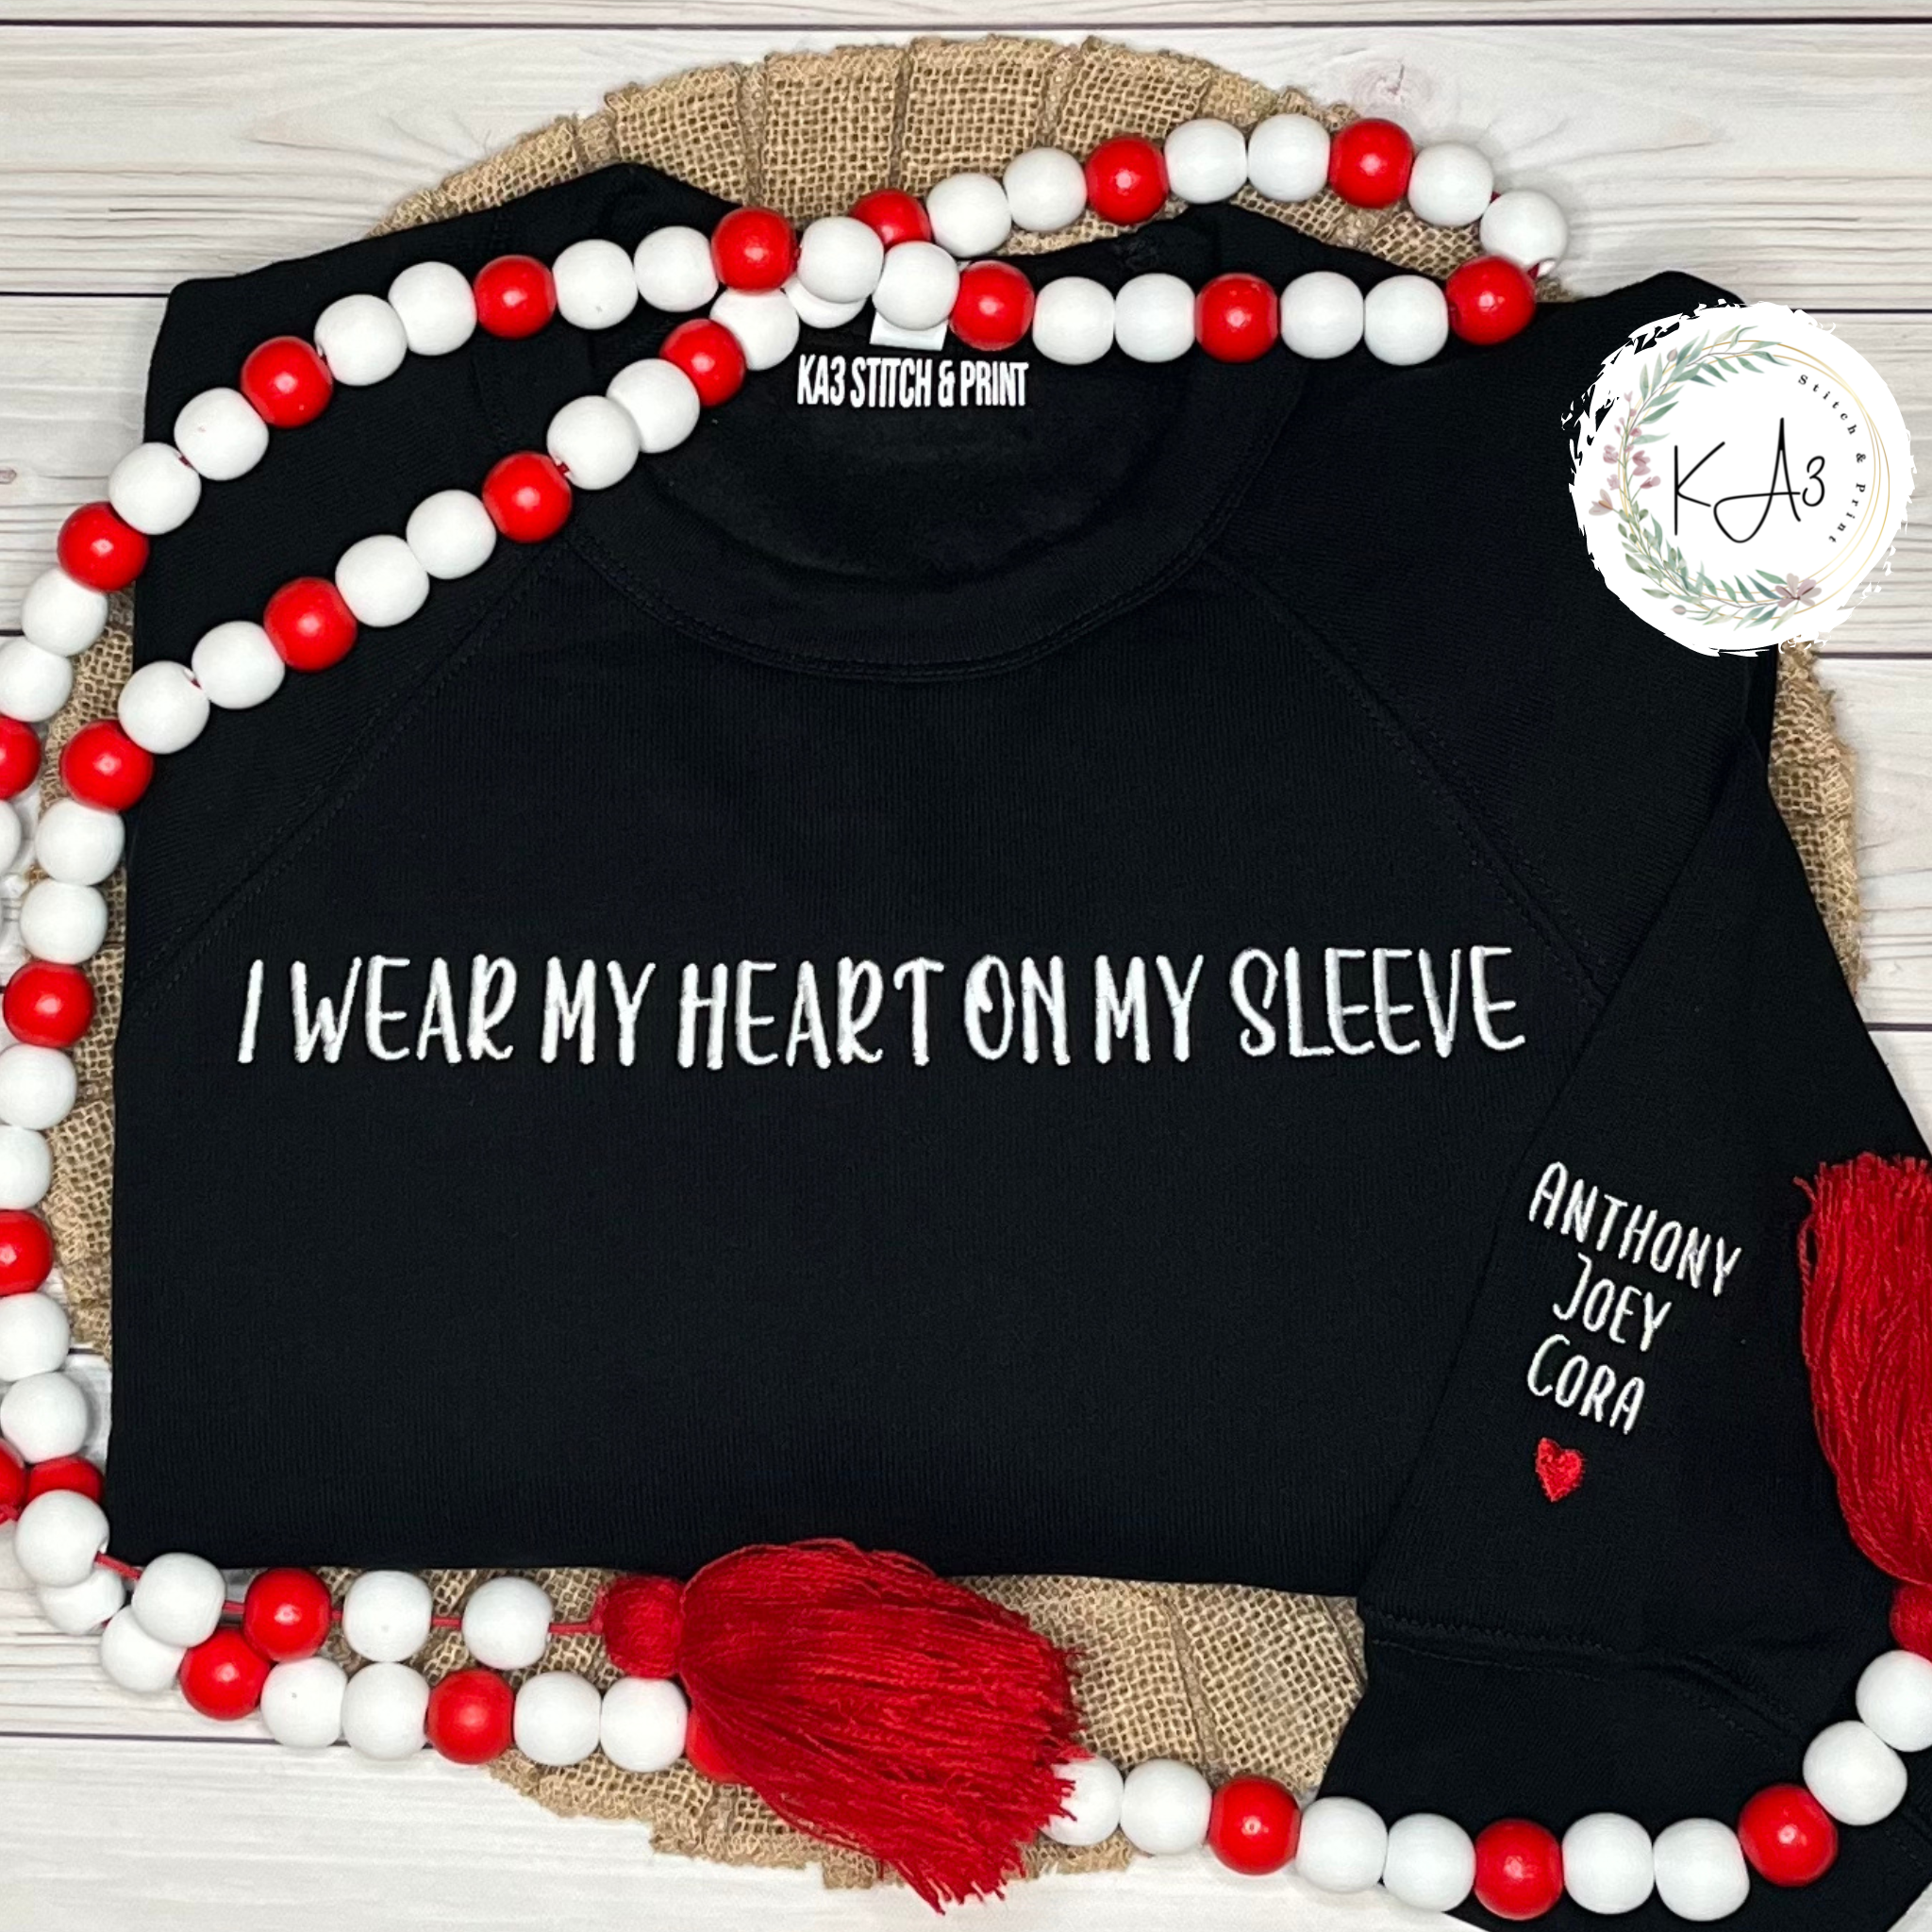 I Wear my Heart on my Sleeve Sweatshirt - KA3 Stitch & Print